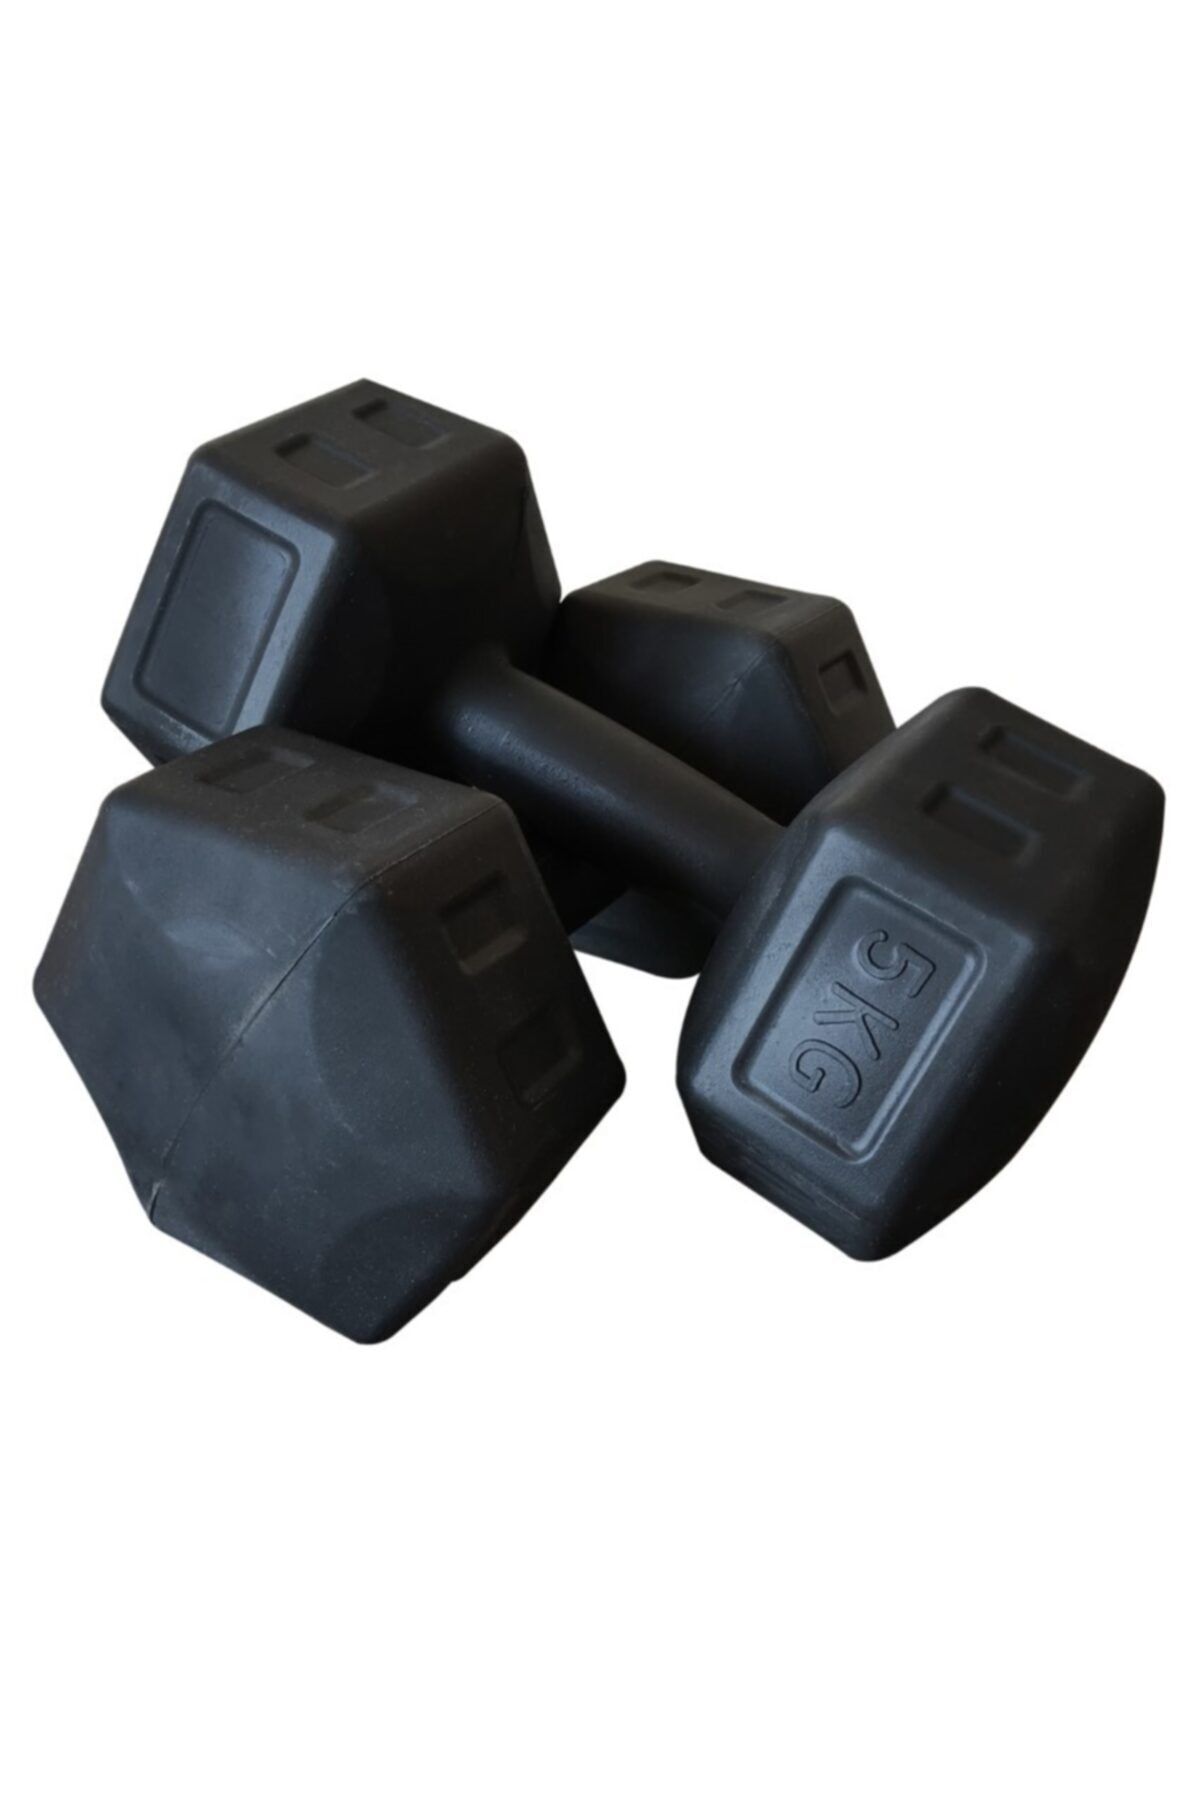 Tedarikcenter Dambıl Seti Fitness Vücut Geliştirme Aleti 5 kg X 2 Adet 10 kg Dumbell Ağırlık Seti - Siyah